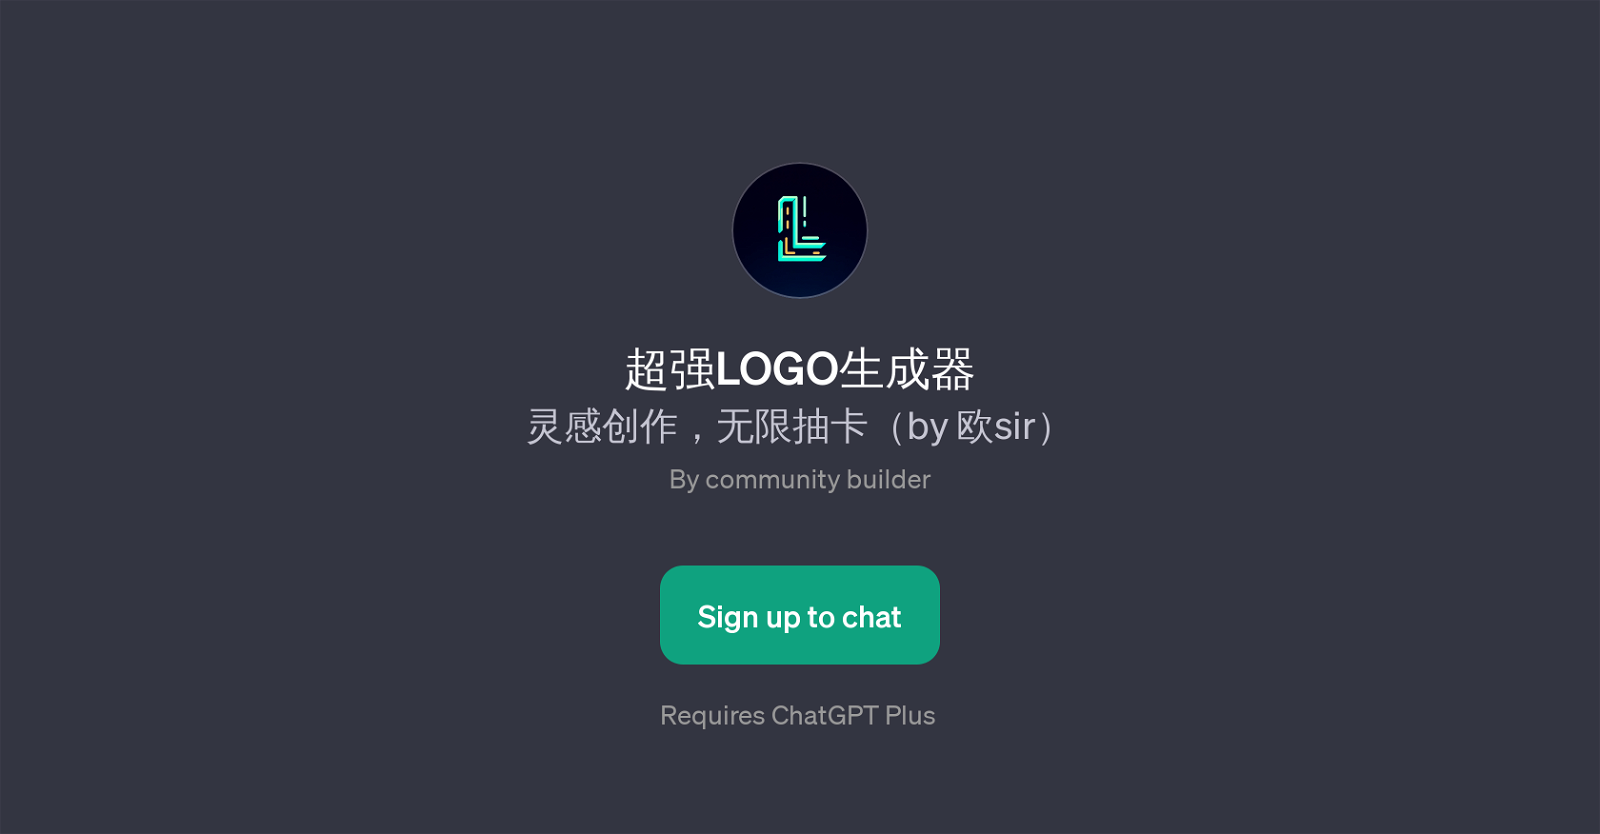 LOGO website